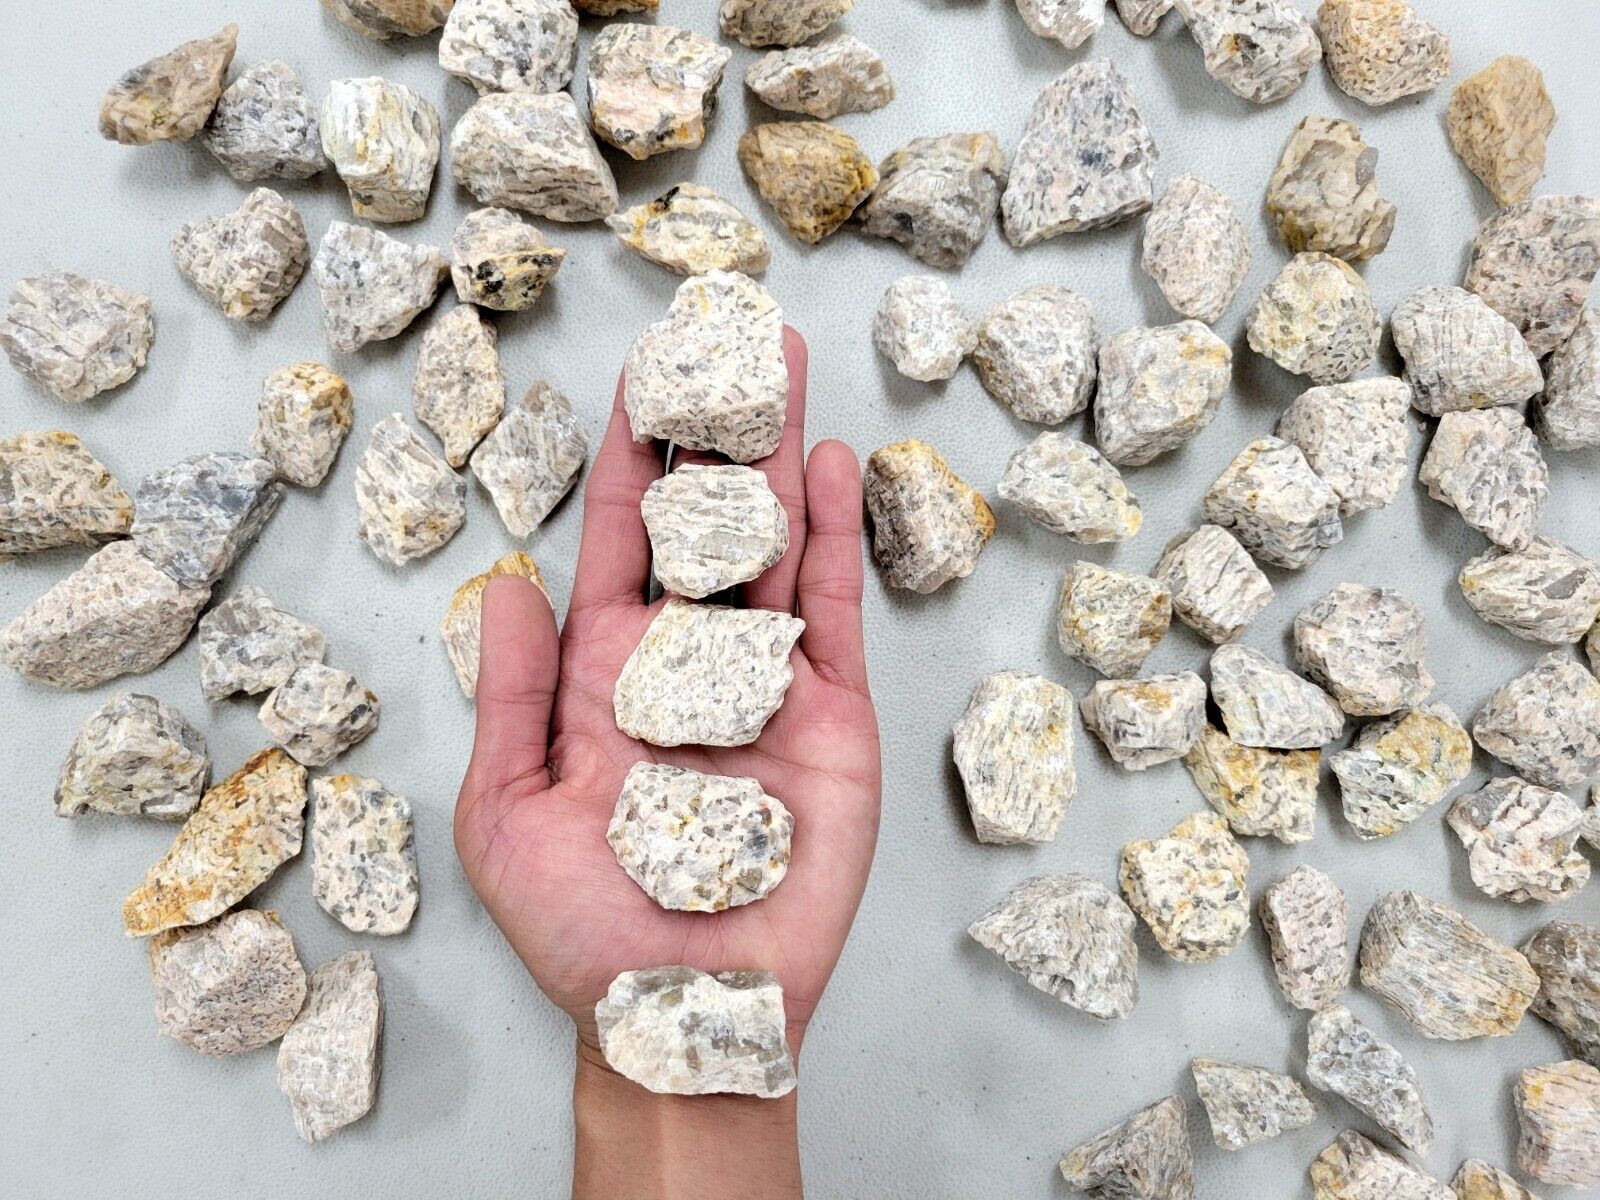 Raw Zebradorite Crystal Stones Rough Feldspar Bulk Rocks for Cabbing Tumbling